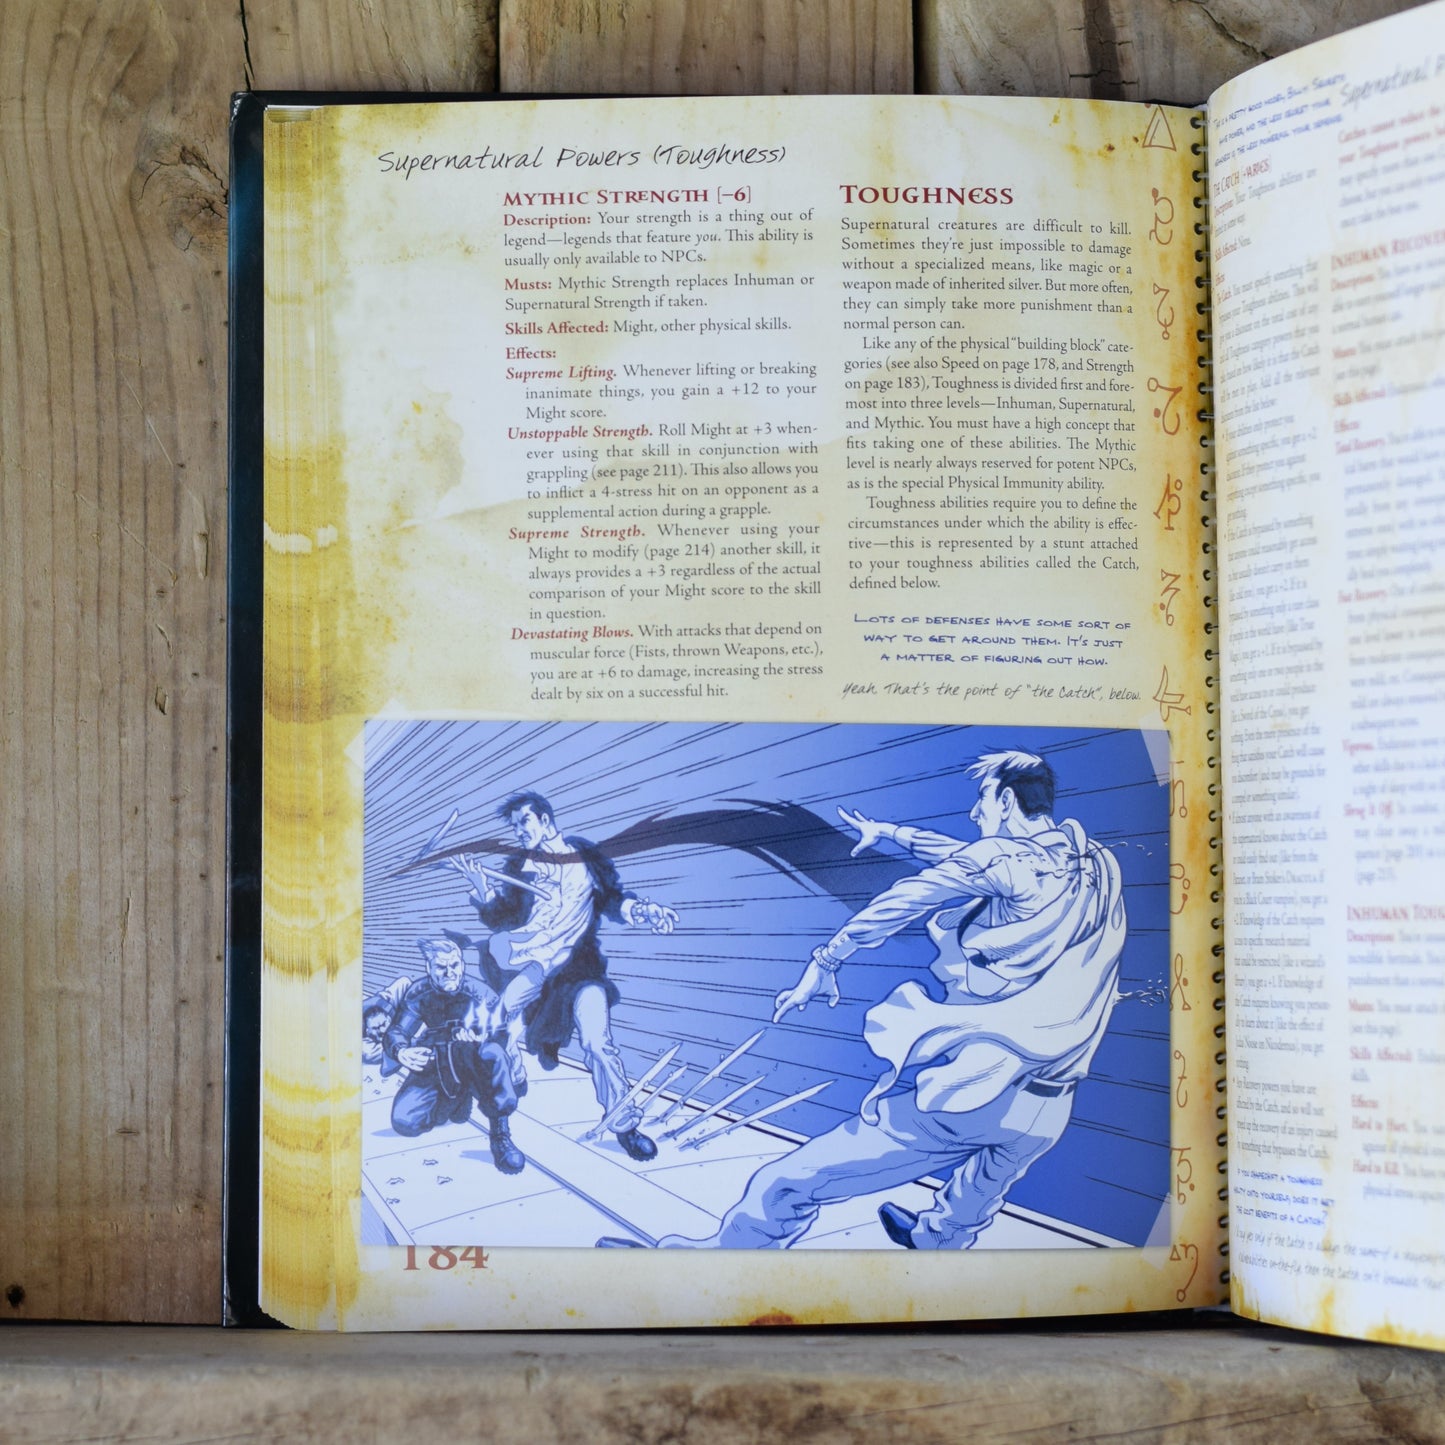 RPG Hardback Book: The Dresden Files RPG, Volume One: Your Story